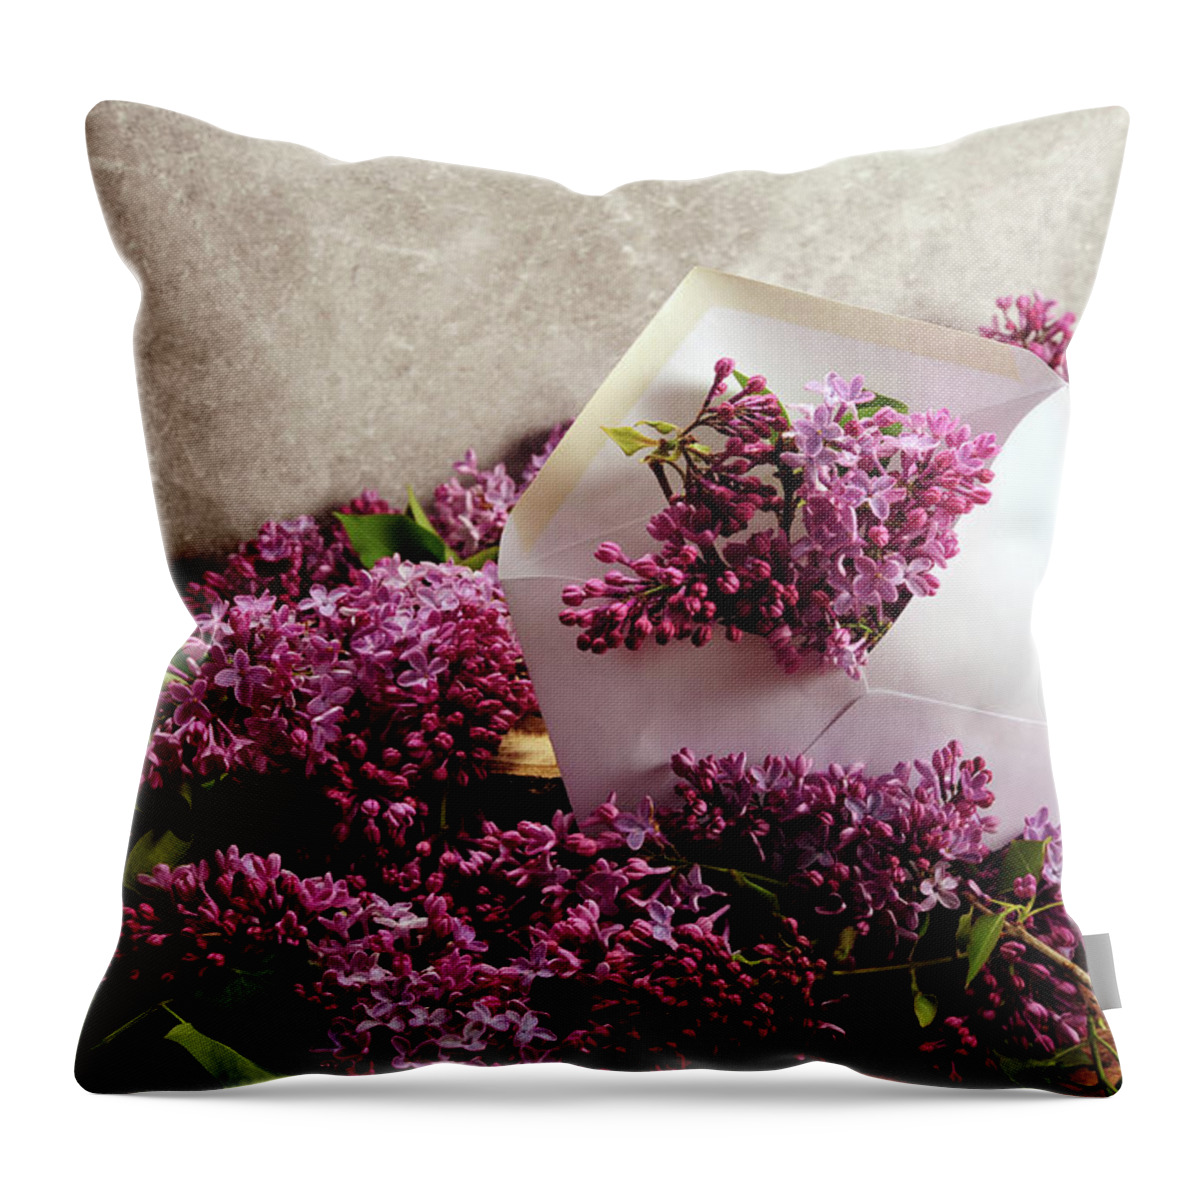 Envelope Throw Pillow featuring the photograph Sending You Lilacs by Randi Grace Nilsberg